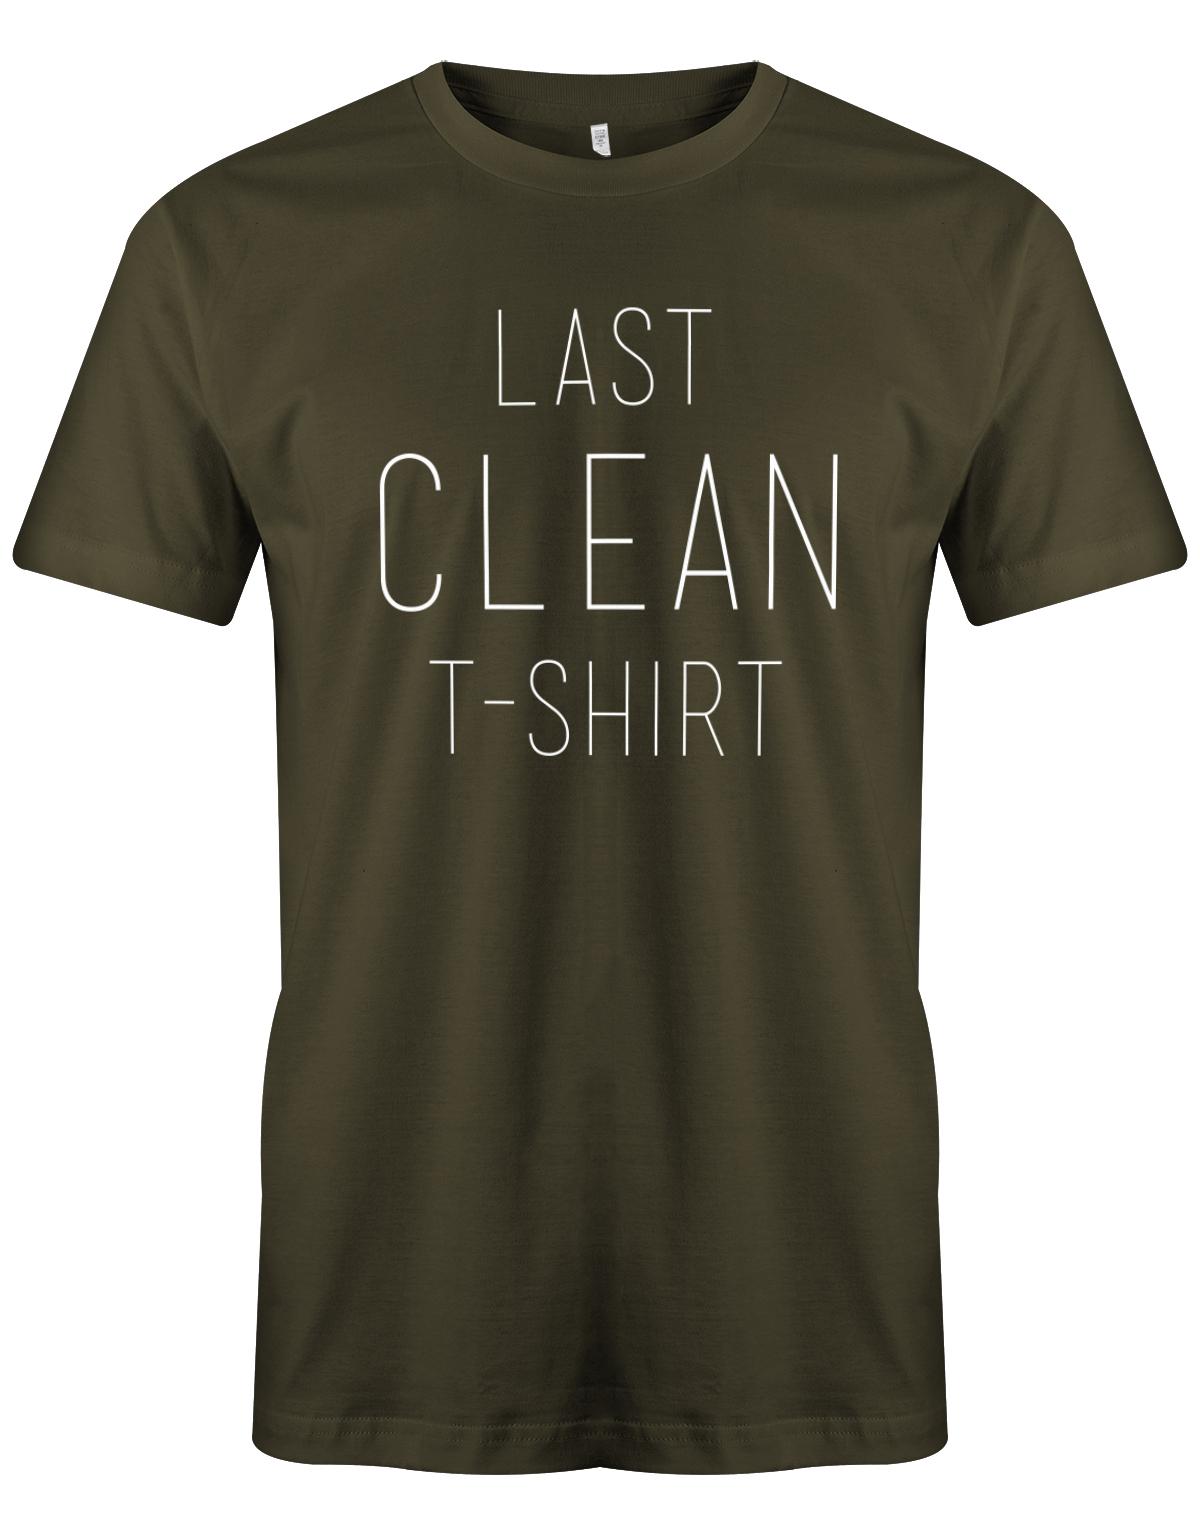 Last Clean T-Shirt - Fun - Herren T-Shirt Army